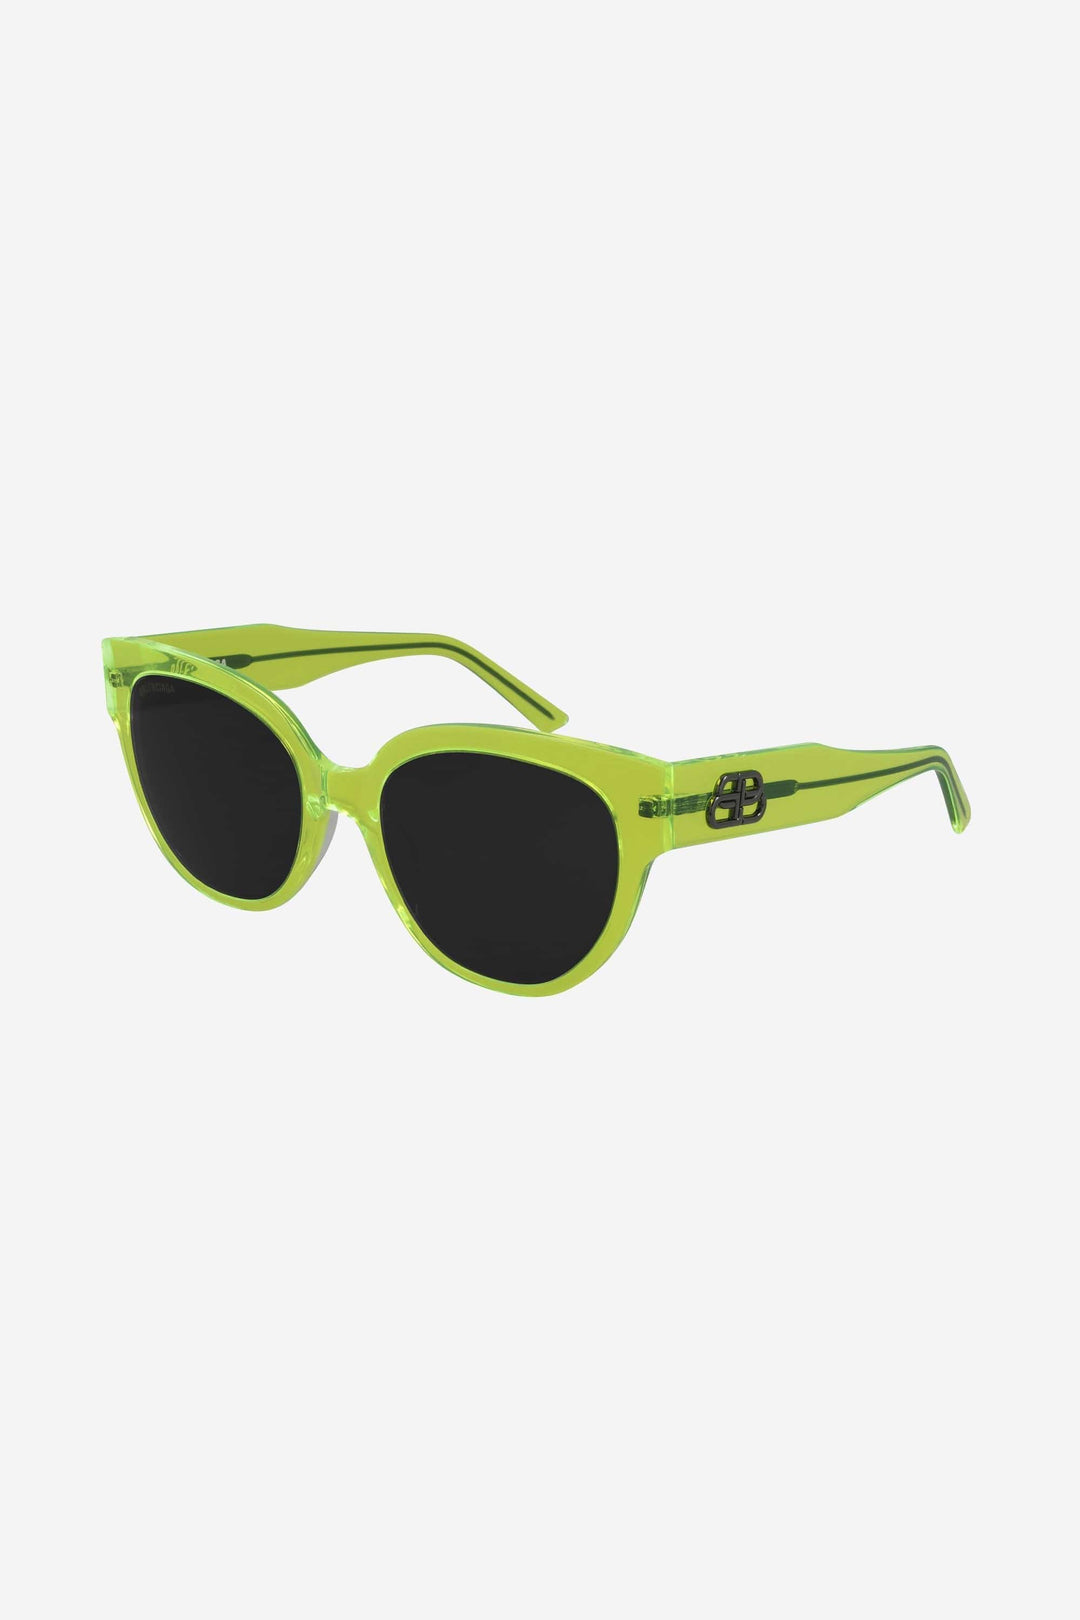 Balenciaga ultra slim yellow fluor sunglasses - Eyewear Club